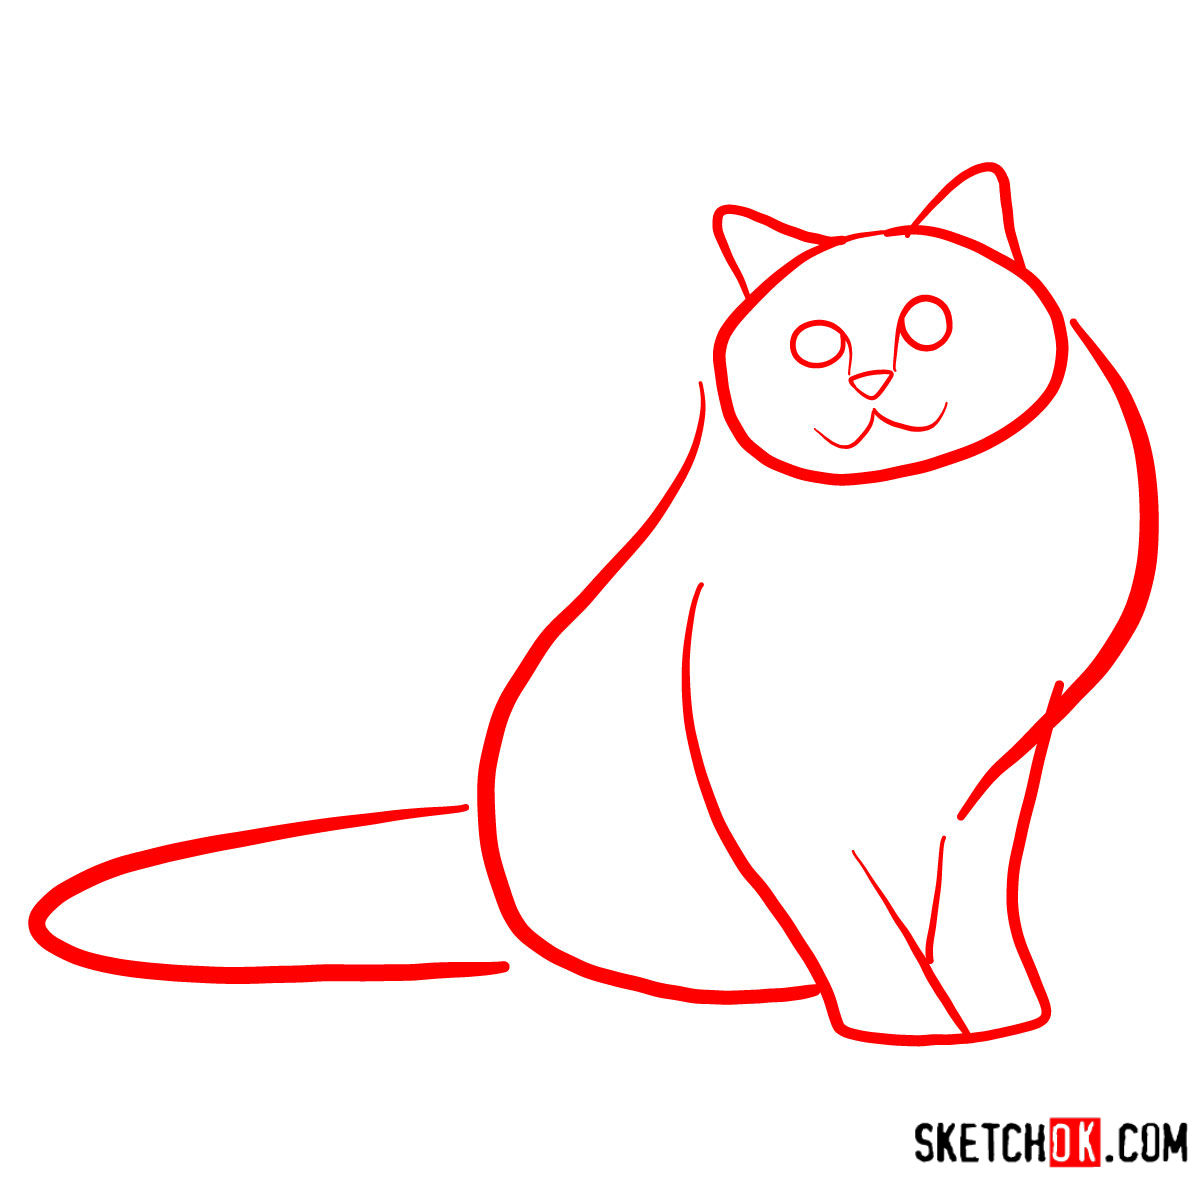 How to draw the Birman cat - step 01